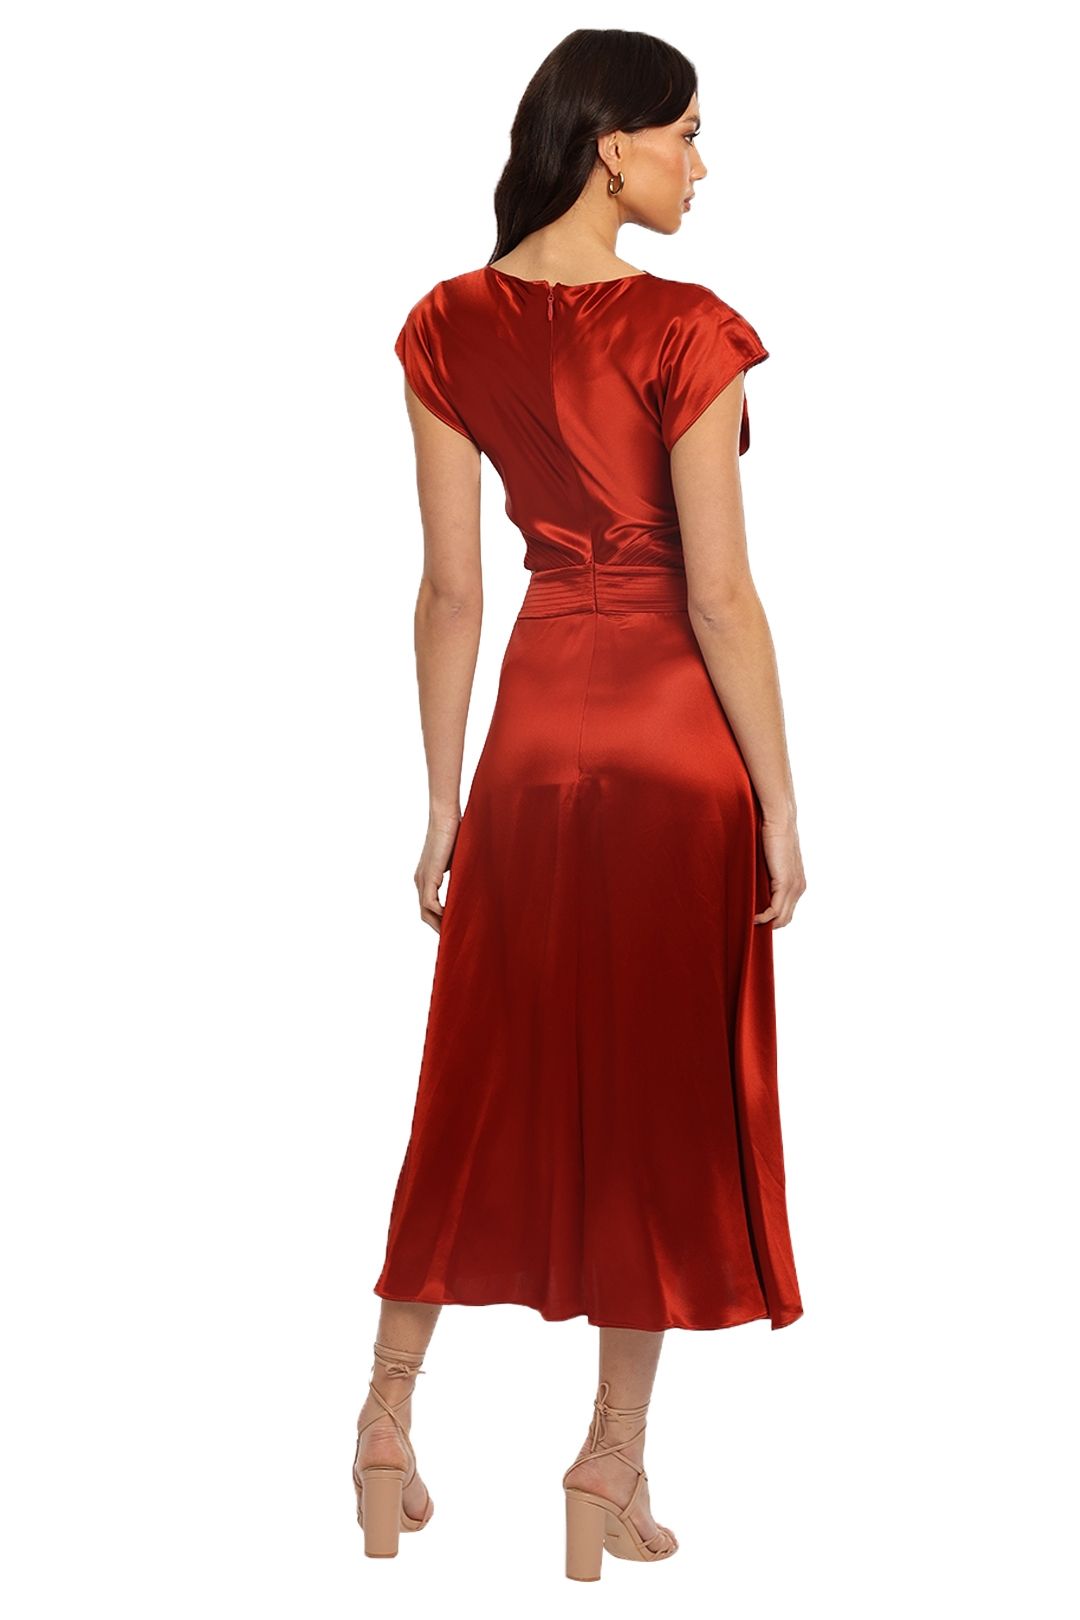 Acler Plympton Dress Cutout